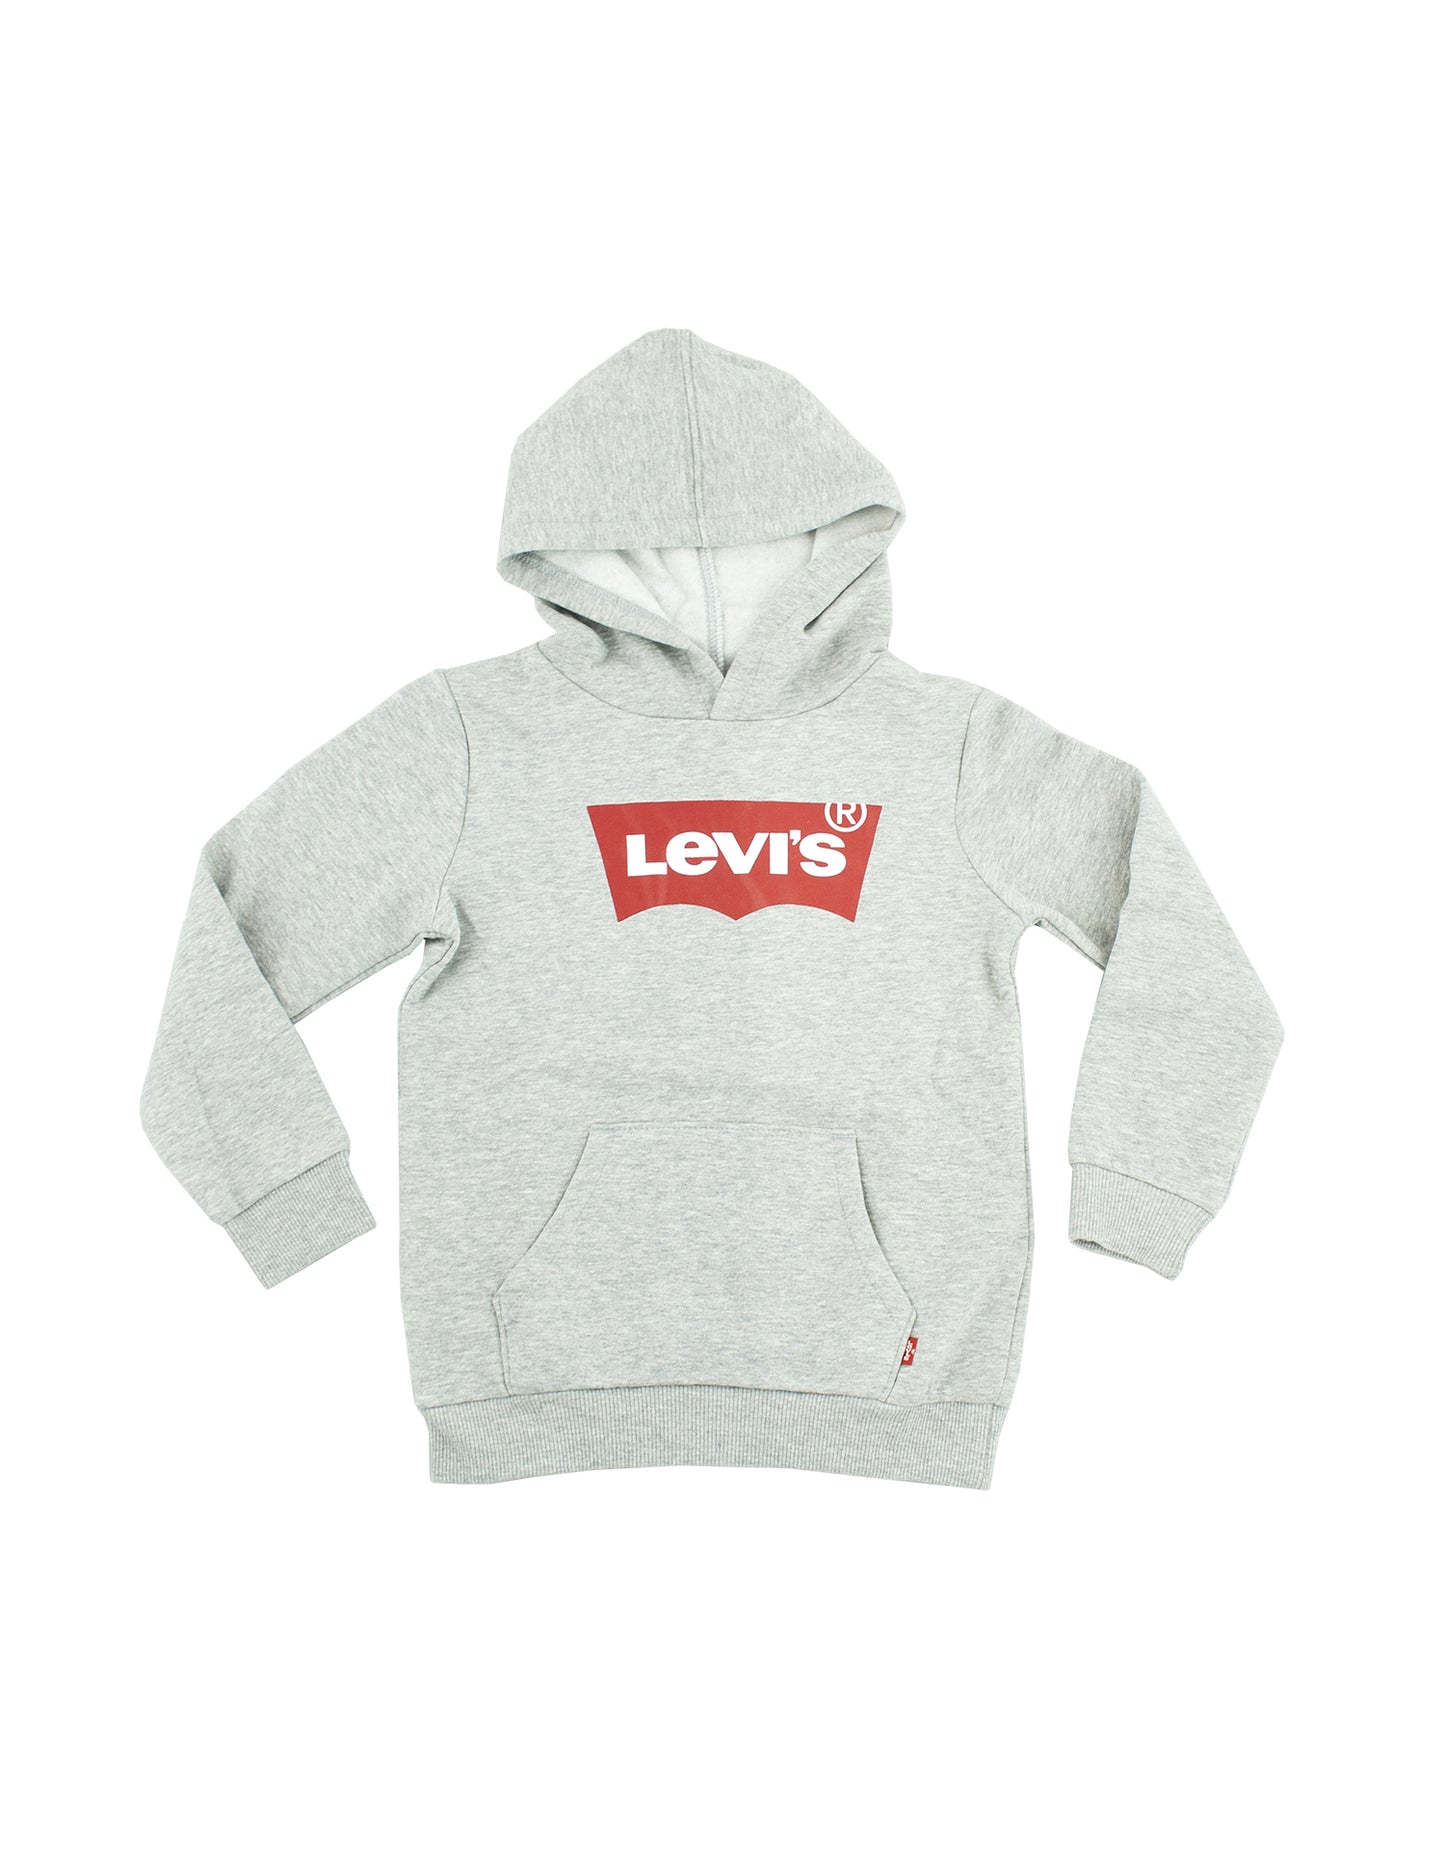 LEVI'S
Levi's Batwing Hoodie gray